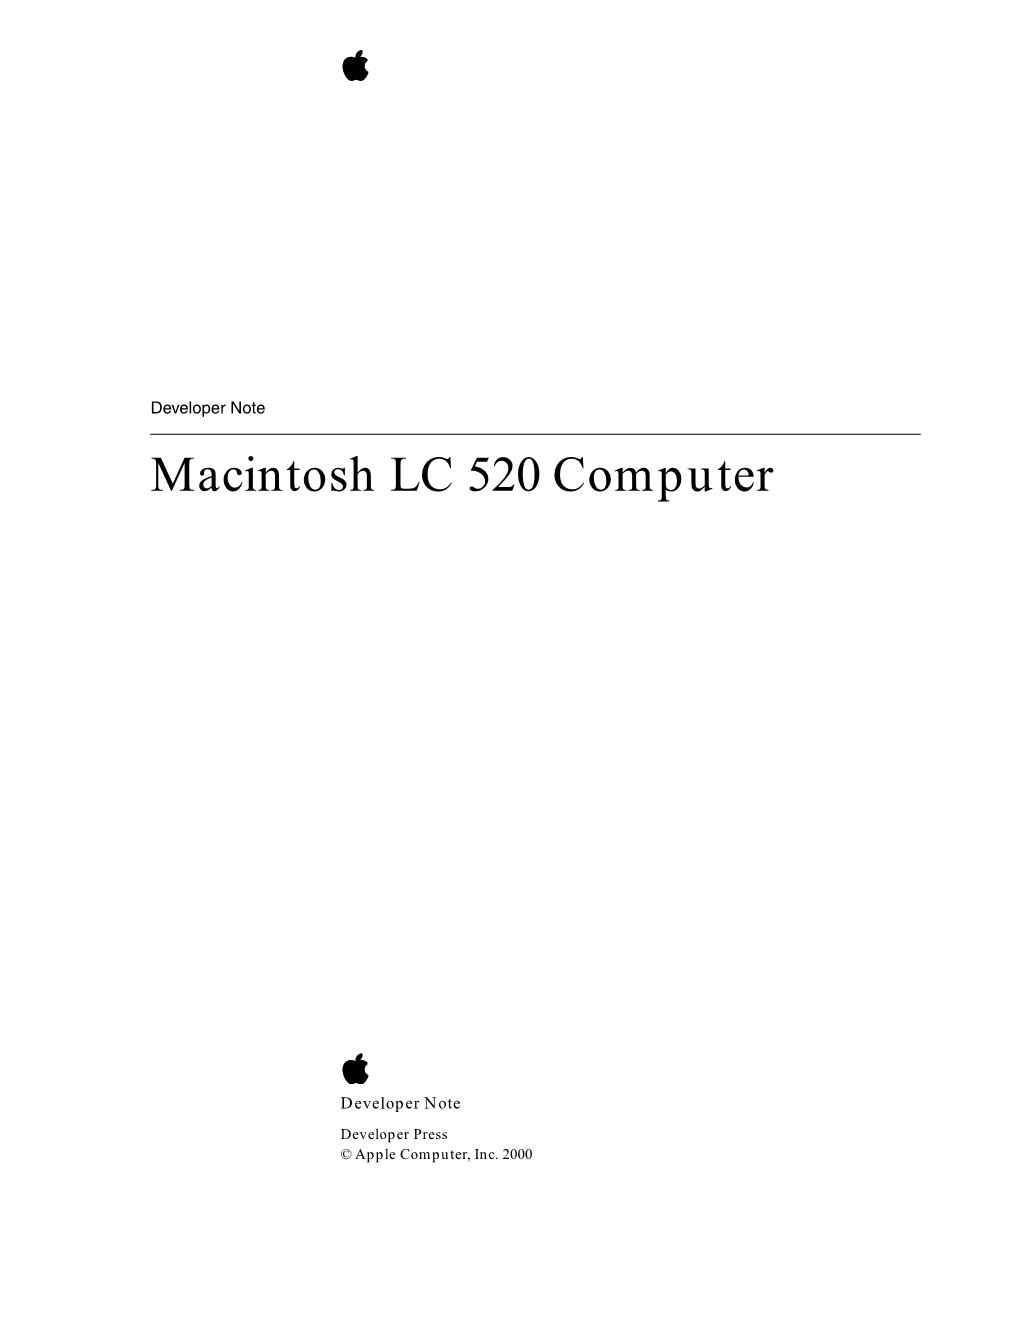 Macintosh LC 520 Computer